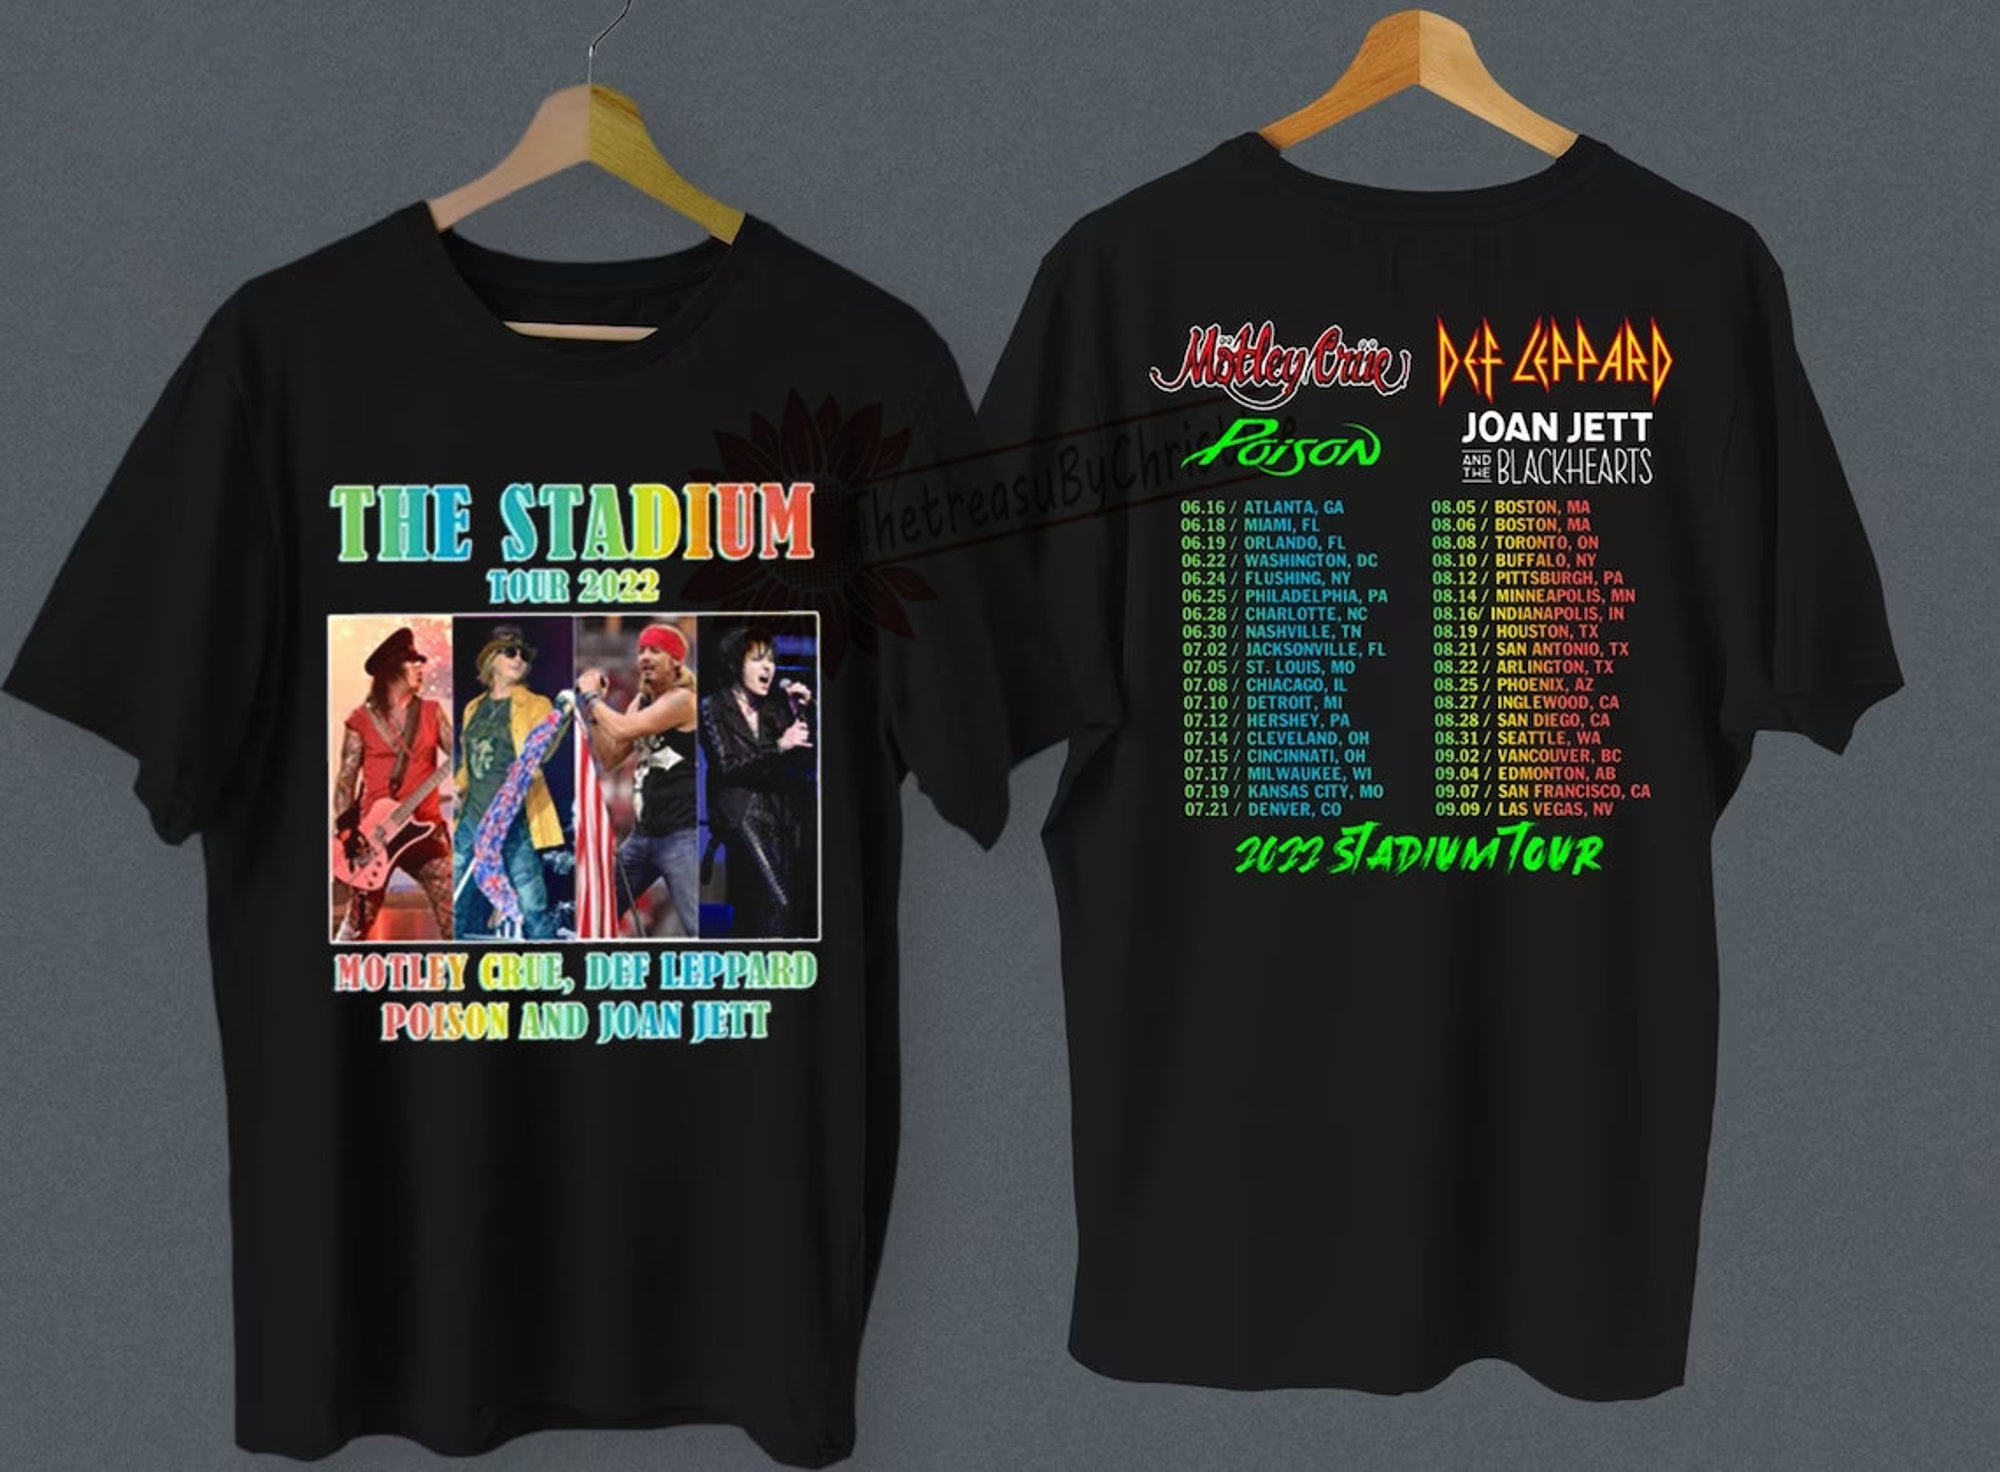 The Stadium Tour Motley Crue Def Leppard Poison Joan Jett & The Blackhearts Shirt, Motley Crue Shirt